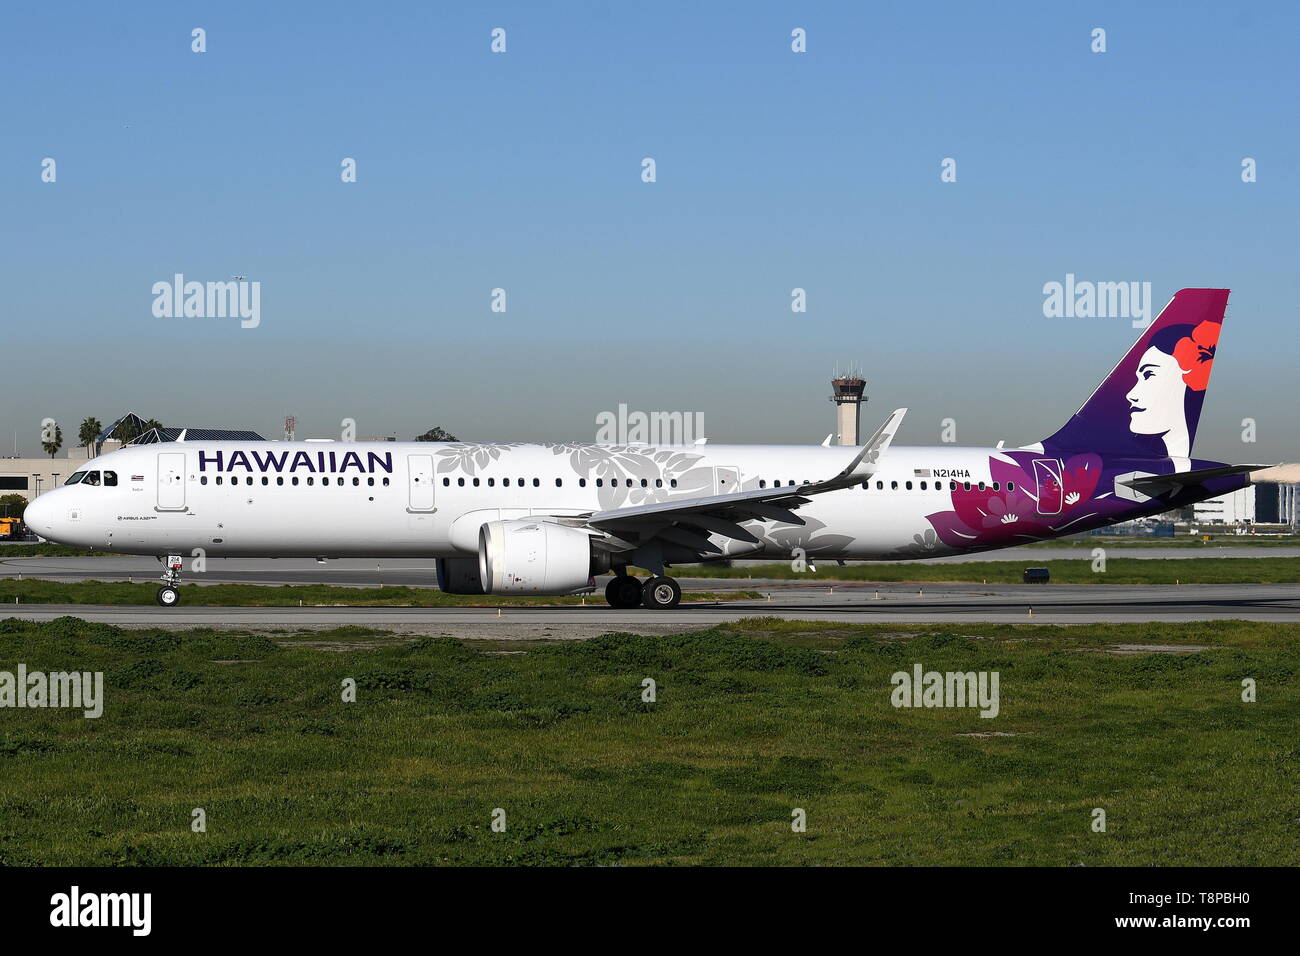 AIRBUS A321-200NEO N214HA OF HAWAIIAN AIR Stock Photo